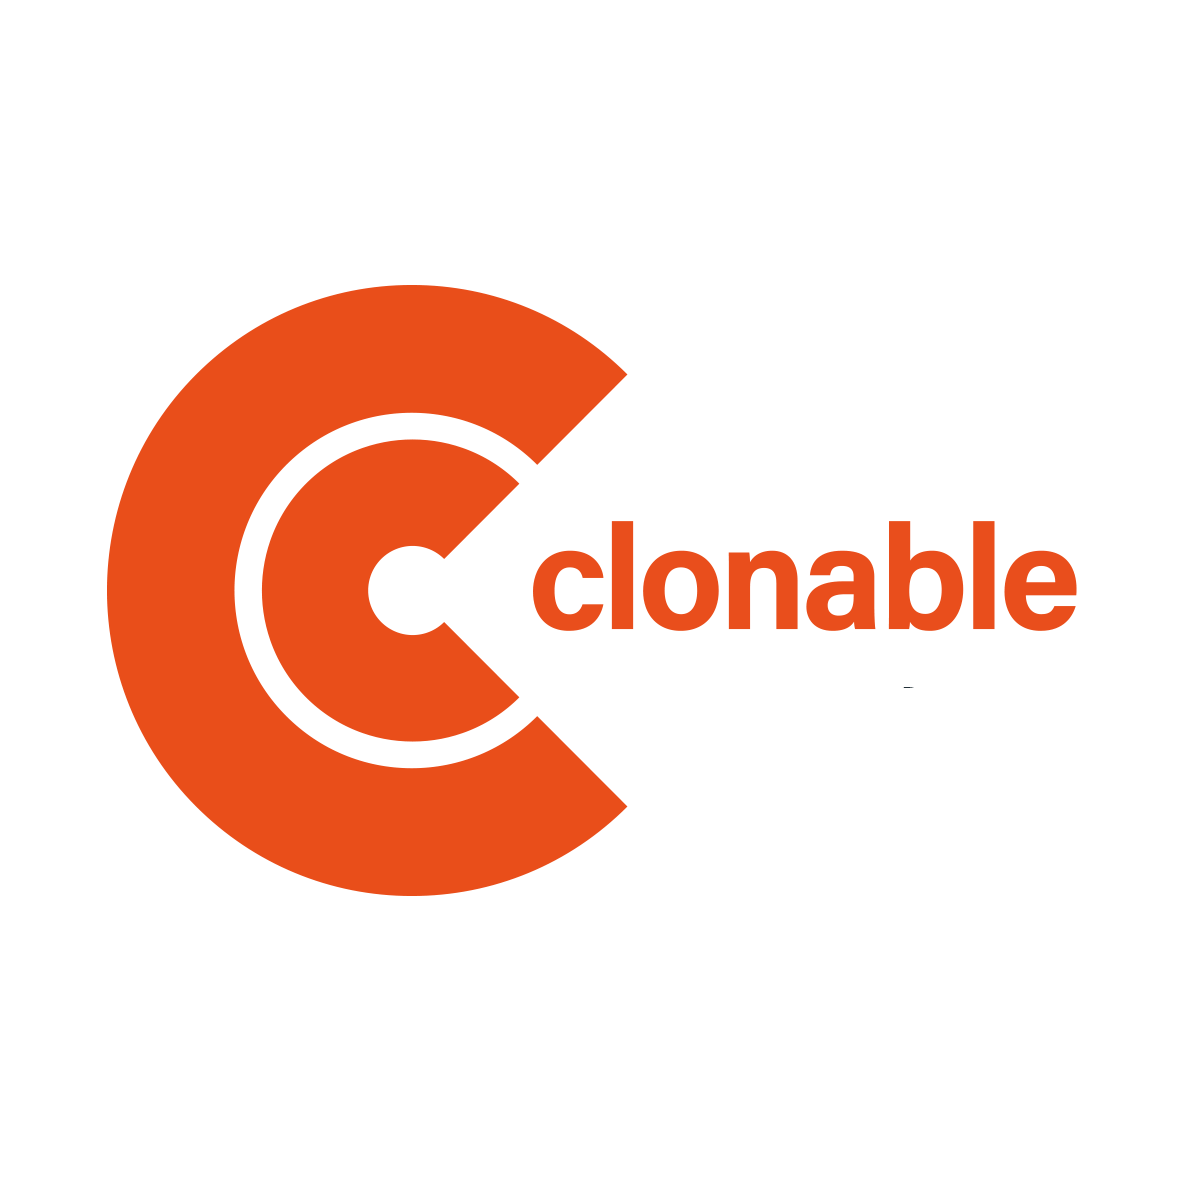 Clonable logo fond clair